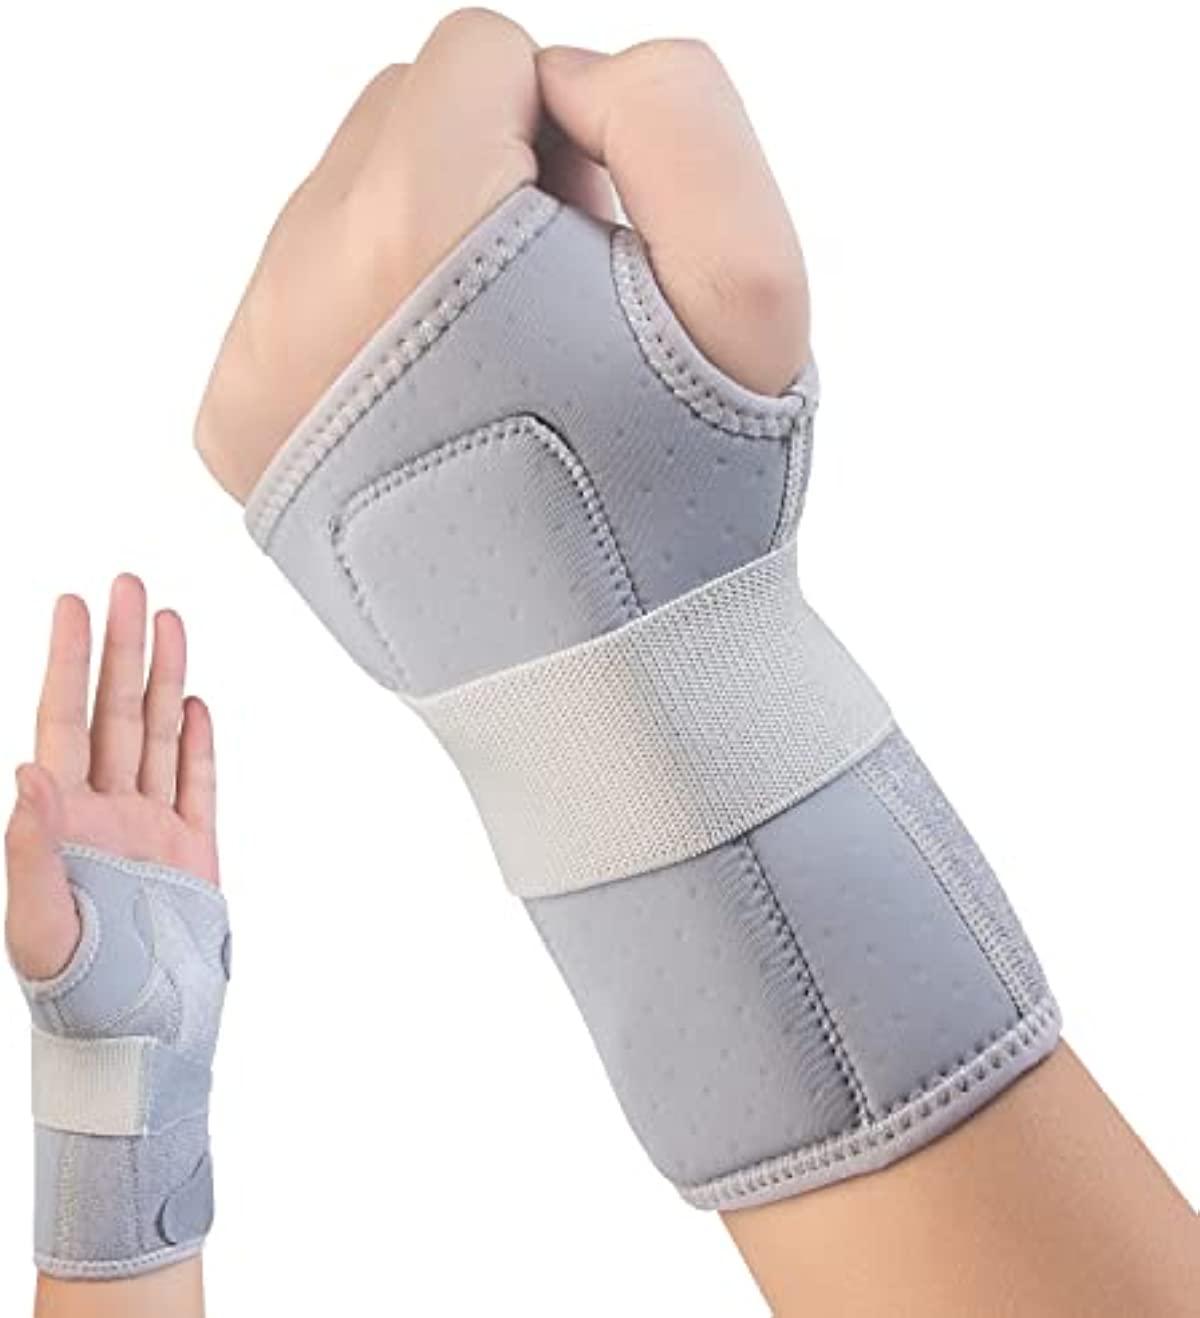 EDNYZAKRN Wrist Splint Night Support, Left Hand Wrist Brace for Carpal Tunnel Syndrome, Arthritis, Tendonitis, Sprains, Pain Relief, Metal Wrist Stabilizer for Men and Women